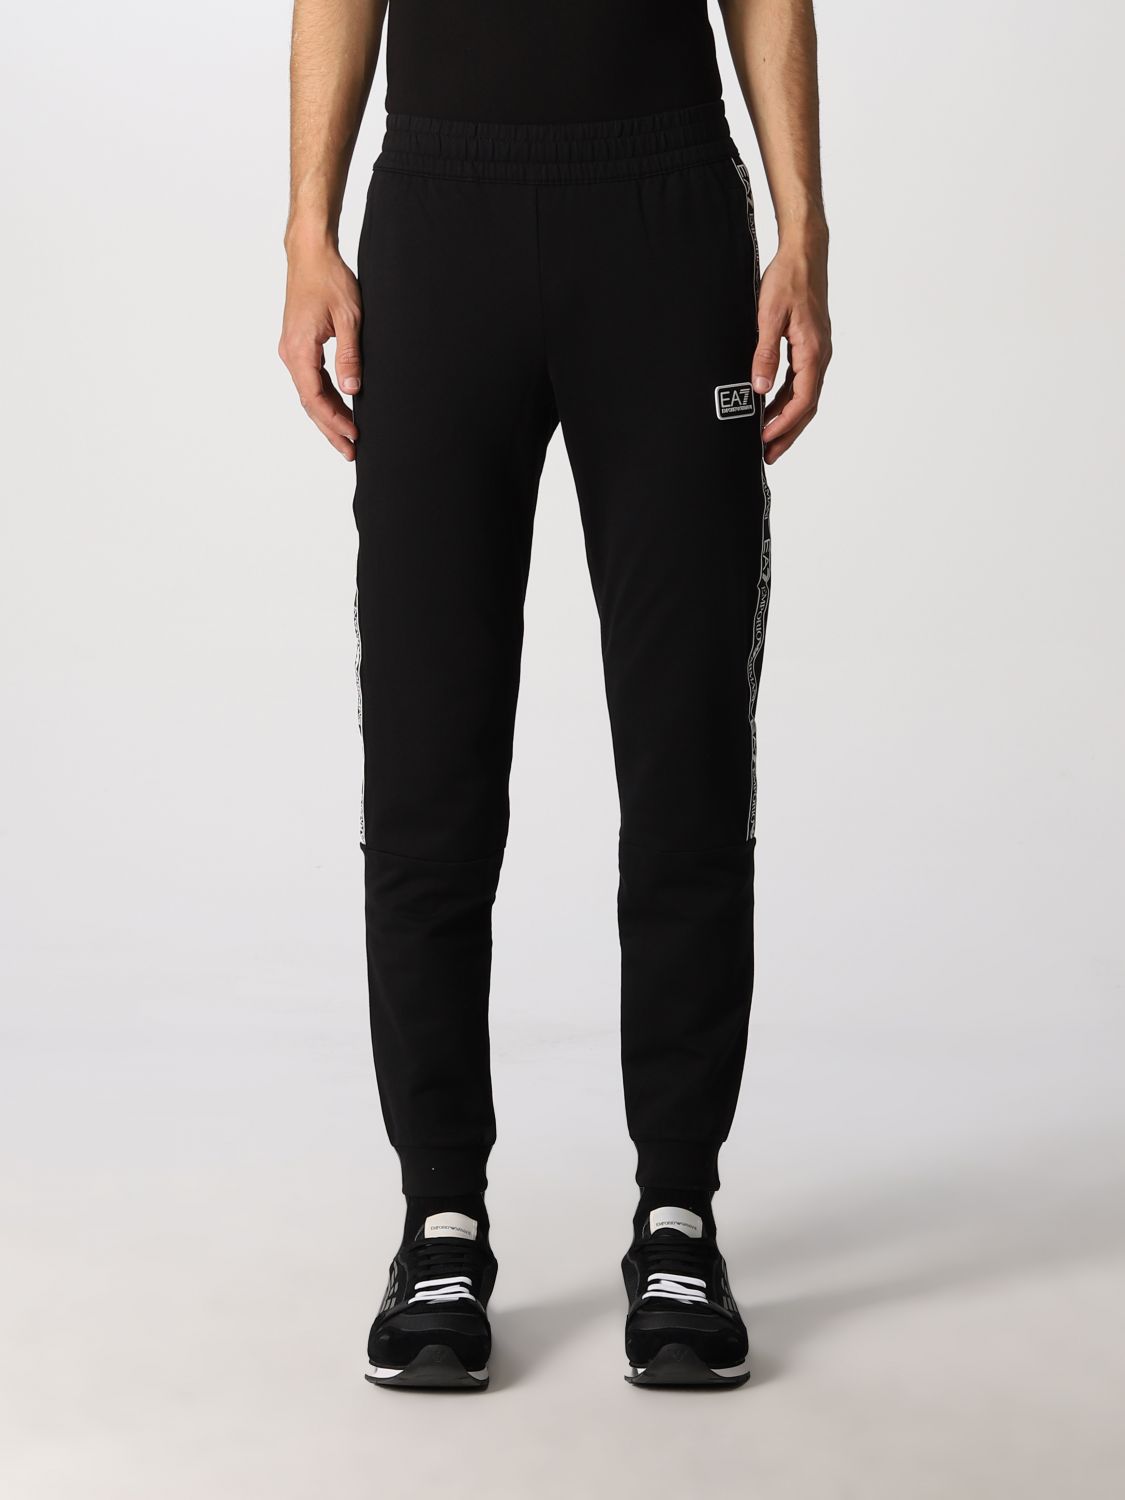 EA7: pants for man - Black | Ea7 pants 3LPP67PJ05Z online on GIGLIO.COM